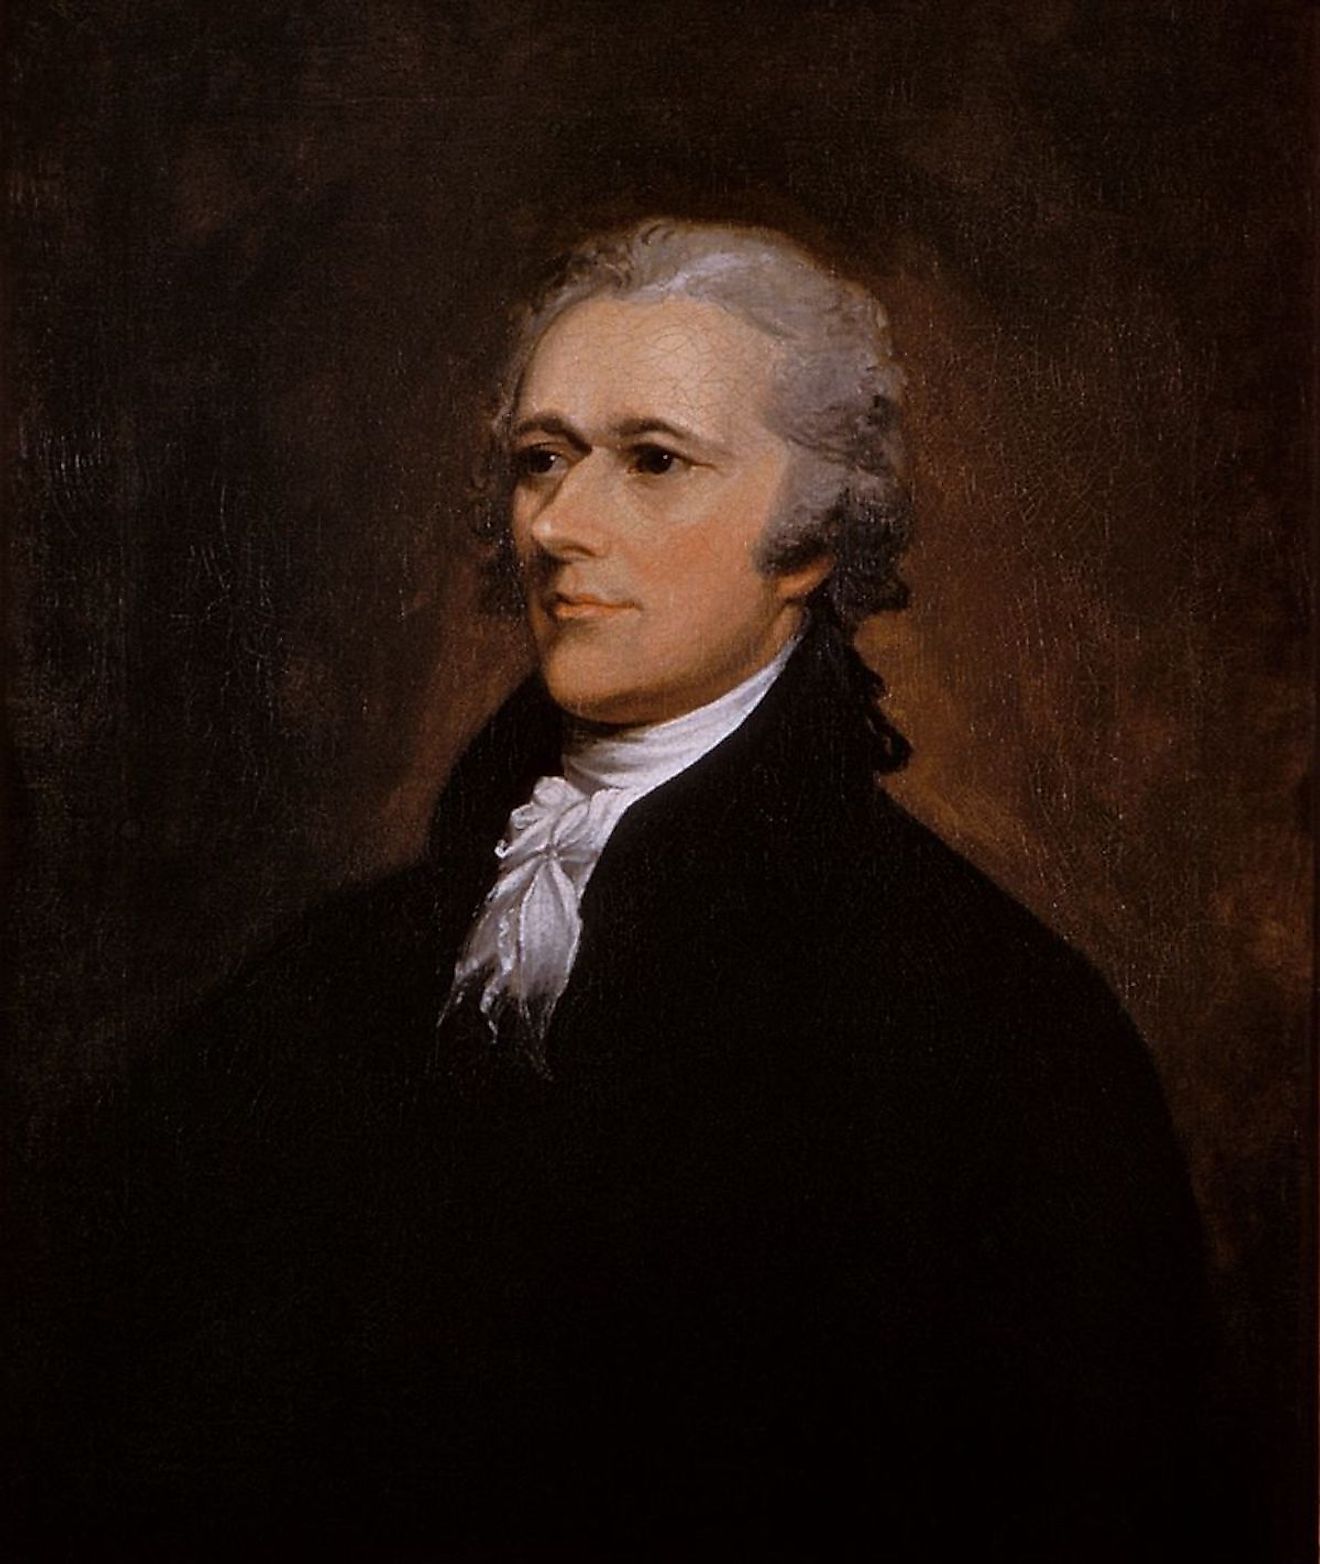 Alexander Hamilton. Image credit: John Trumbull/Public domain